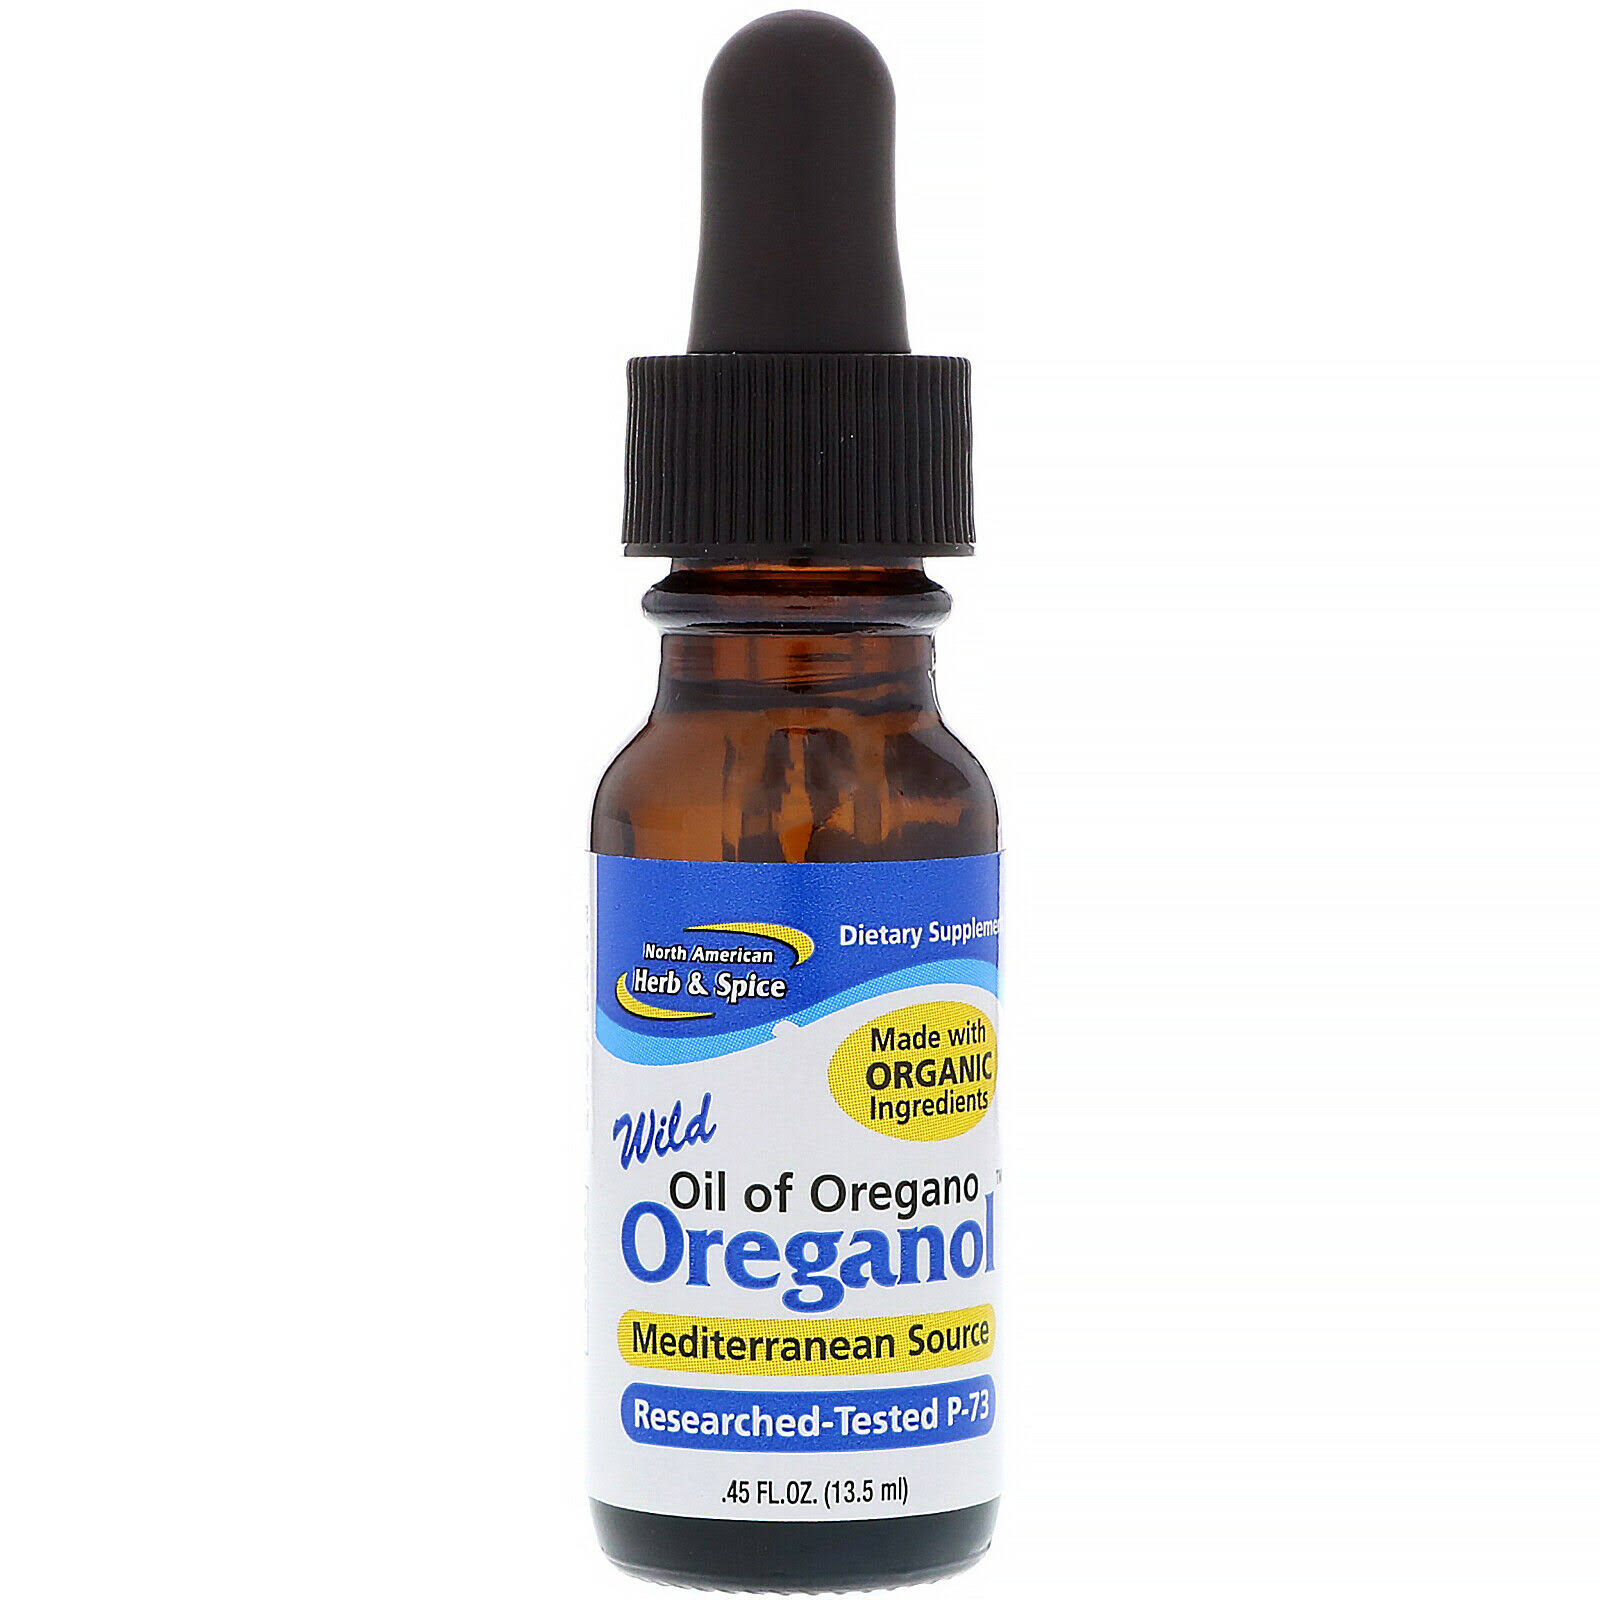 North American Herb & Spice Oil of Oregano Oreganol Liquid - 13.5 ml